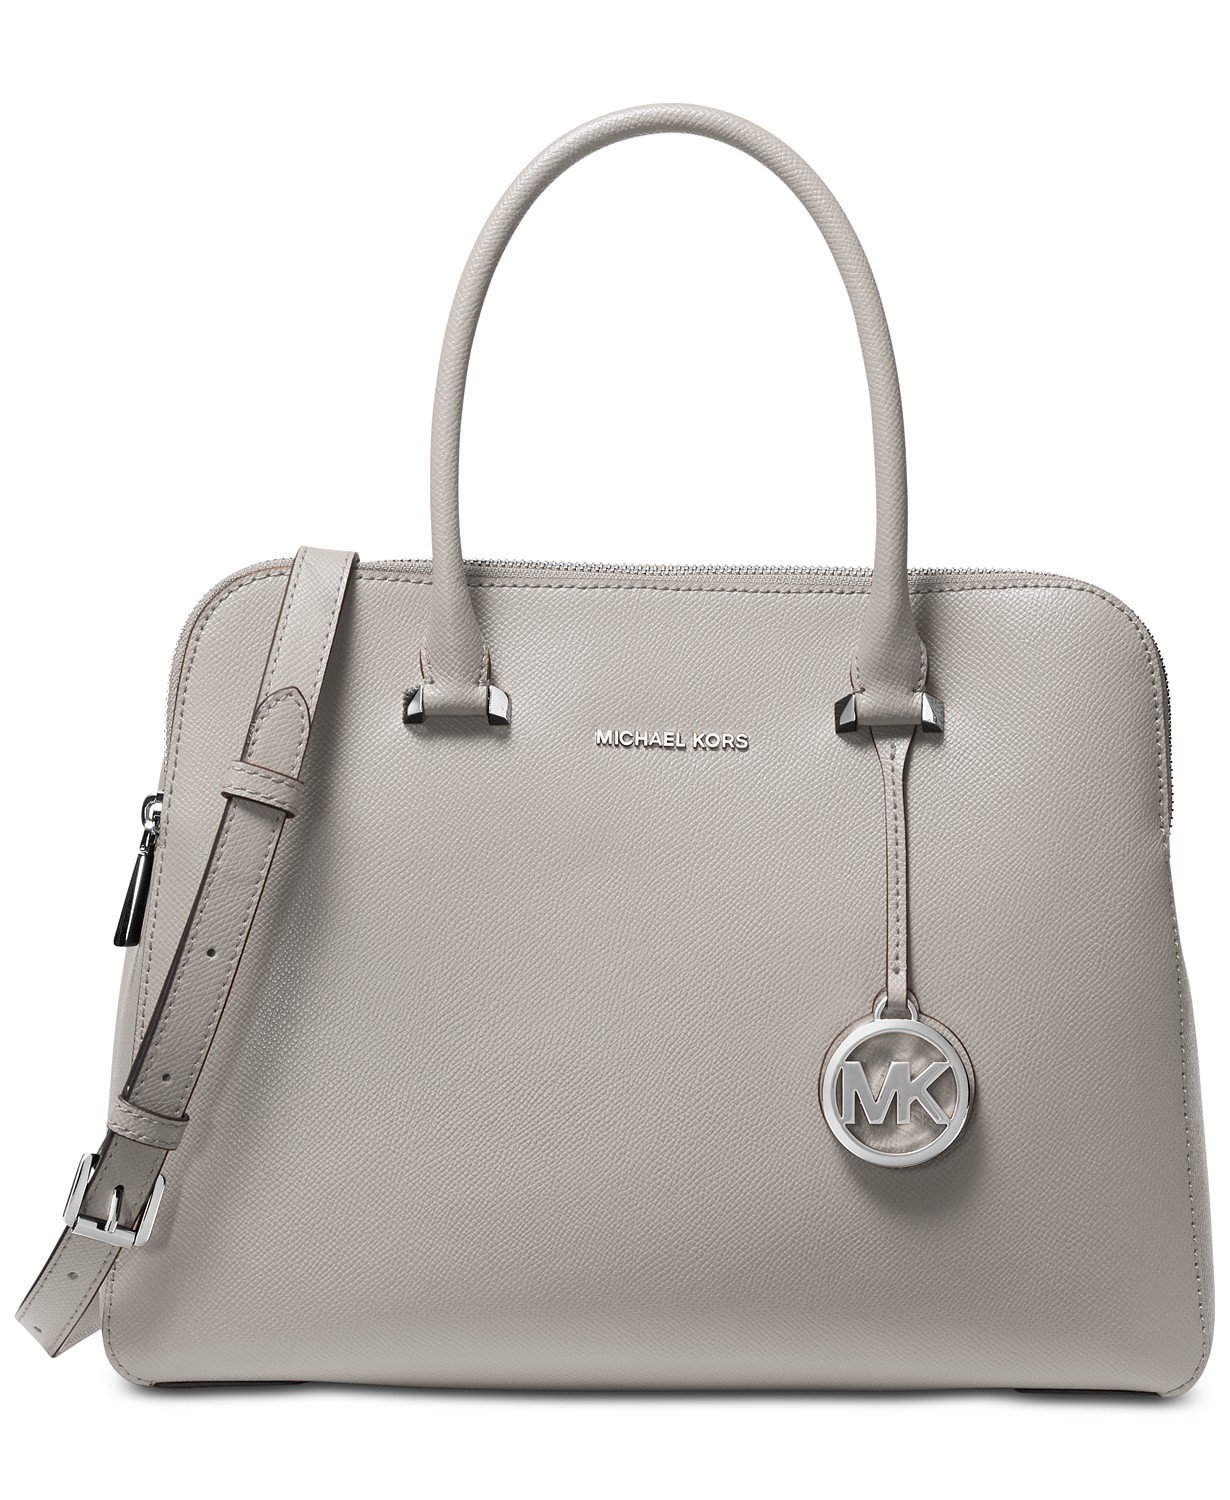 Save 50% Off Michael Kors Handbags at Macy’s